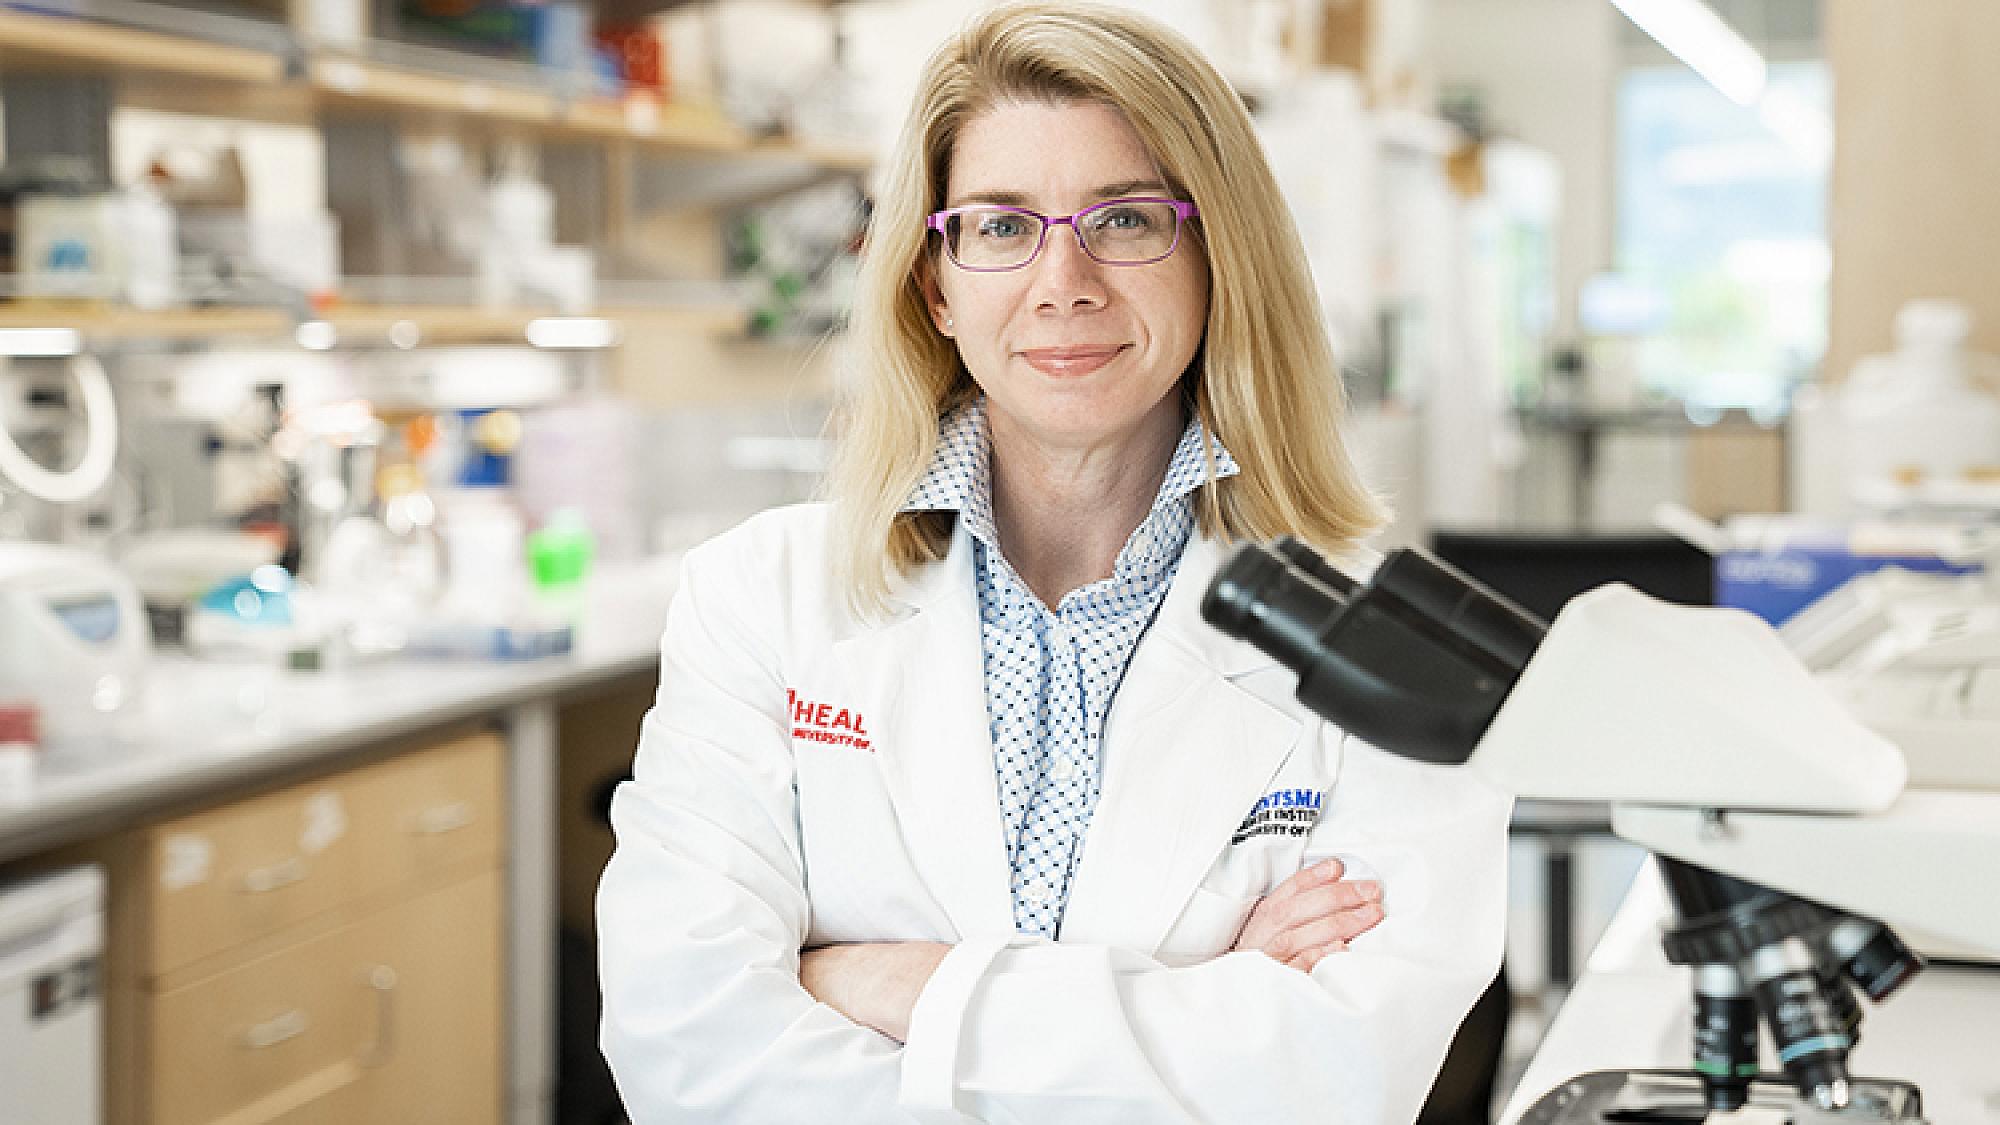 Allie Grossman posing in lab coat in research lab